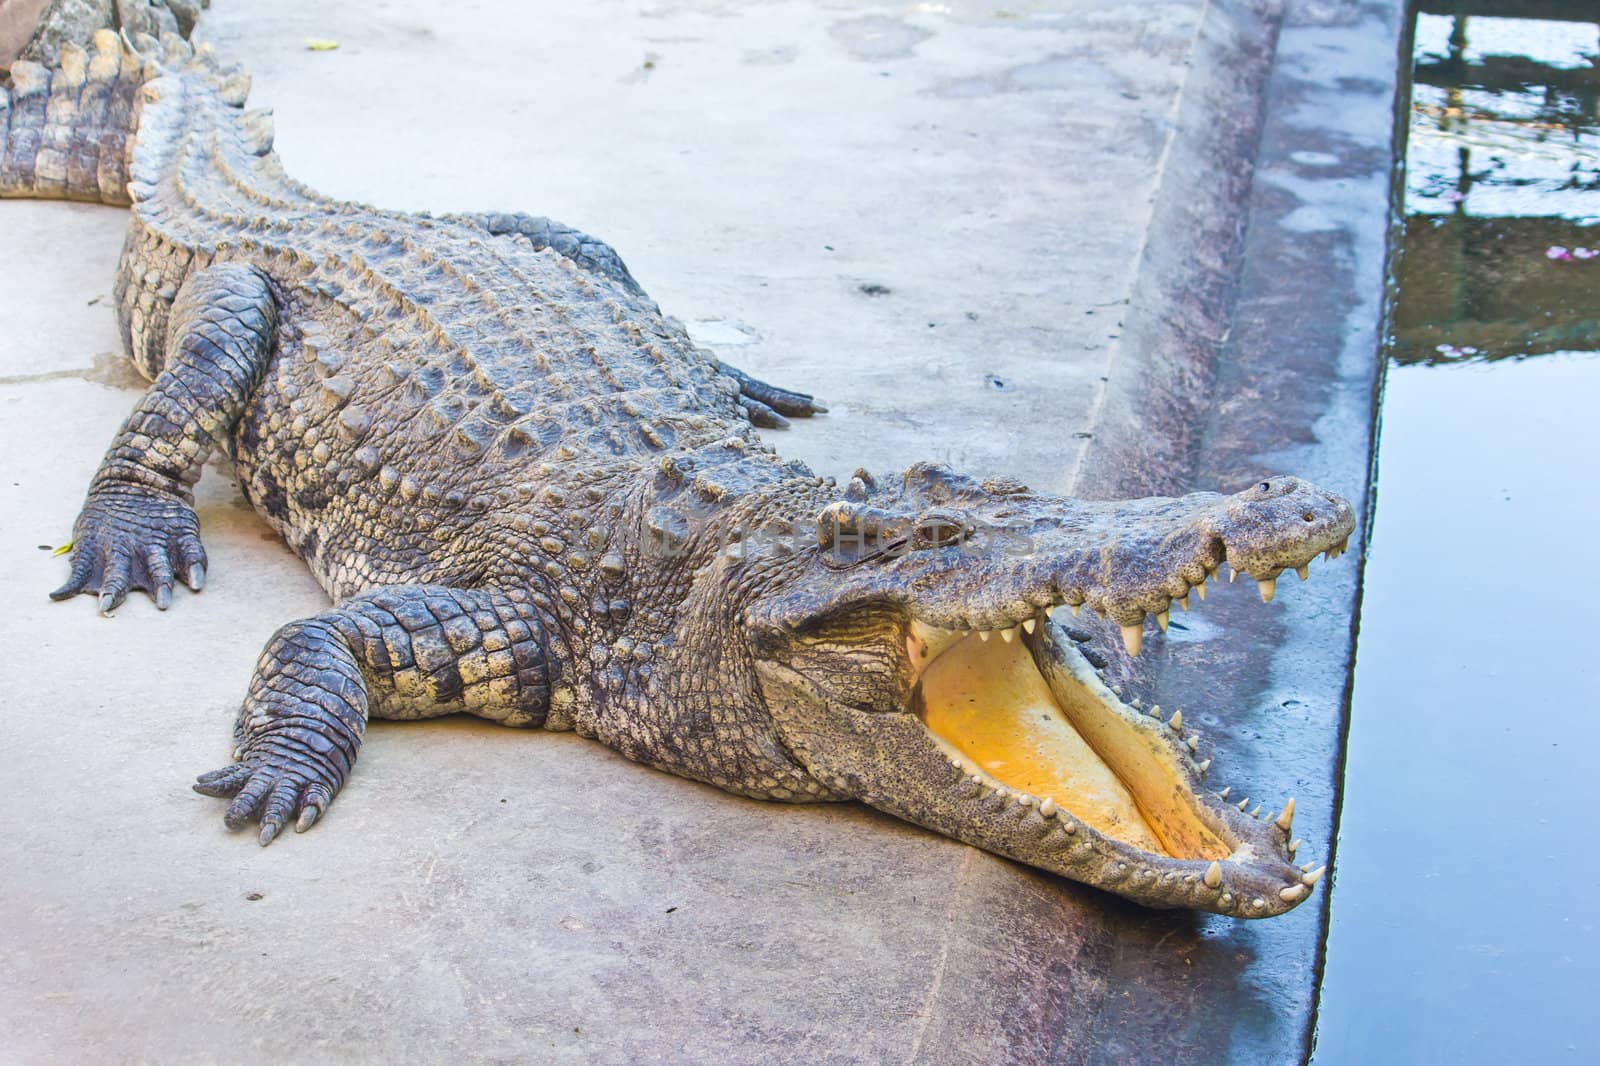 Dangerous crocodile open mouth